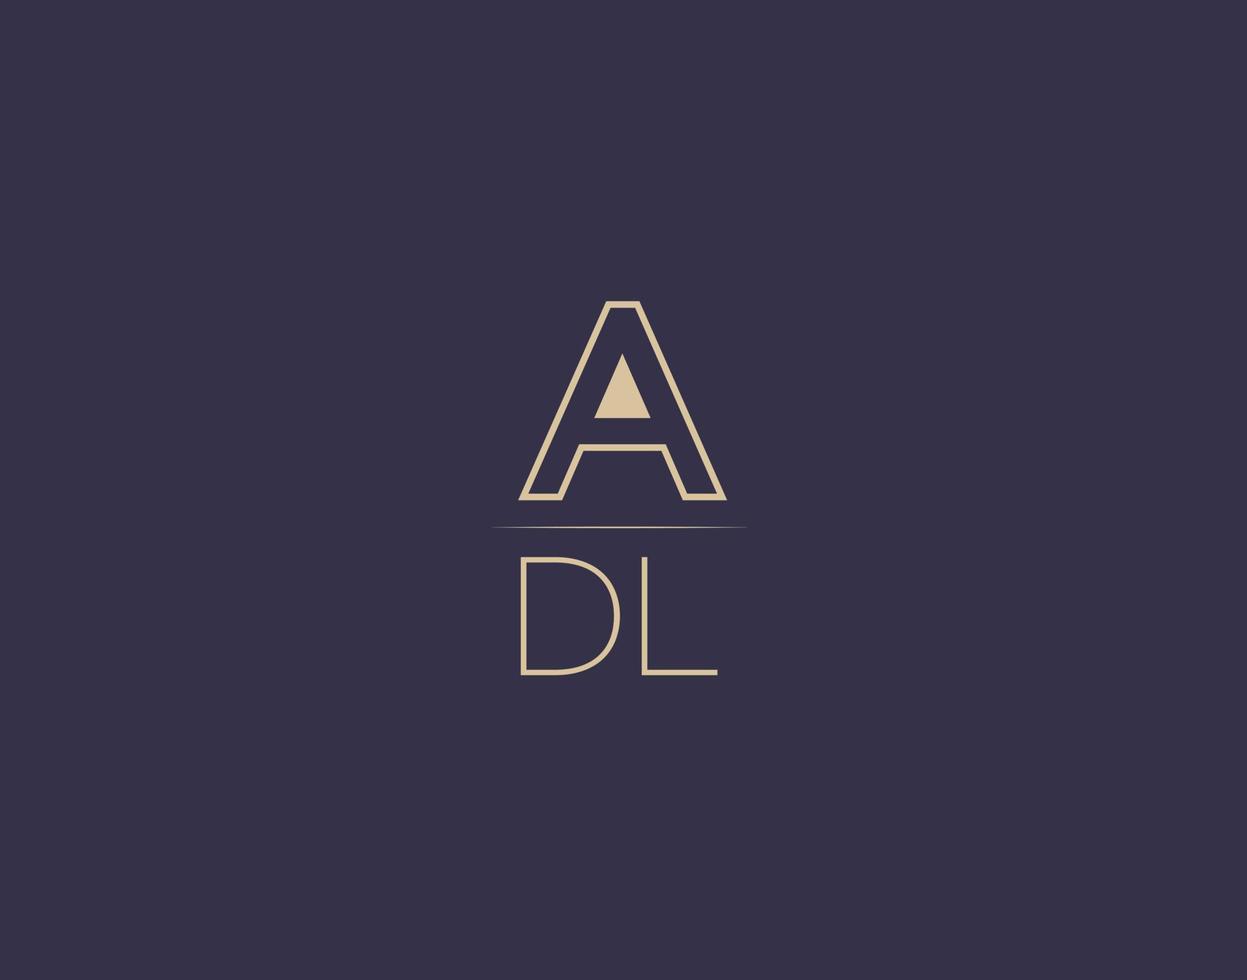 adl letter logo design imagens vetoriais minimalistas modernas vetor